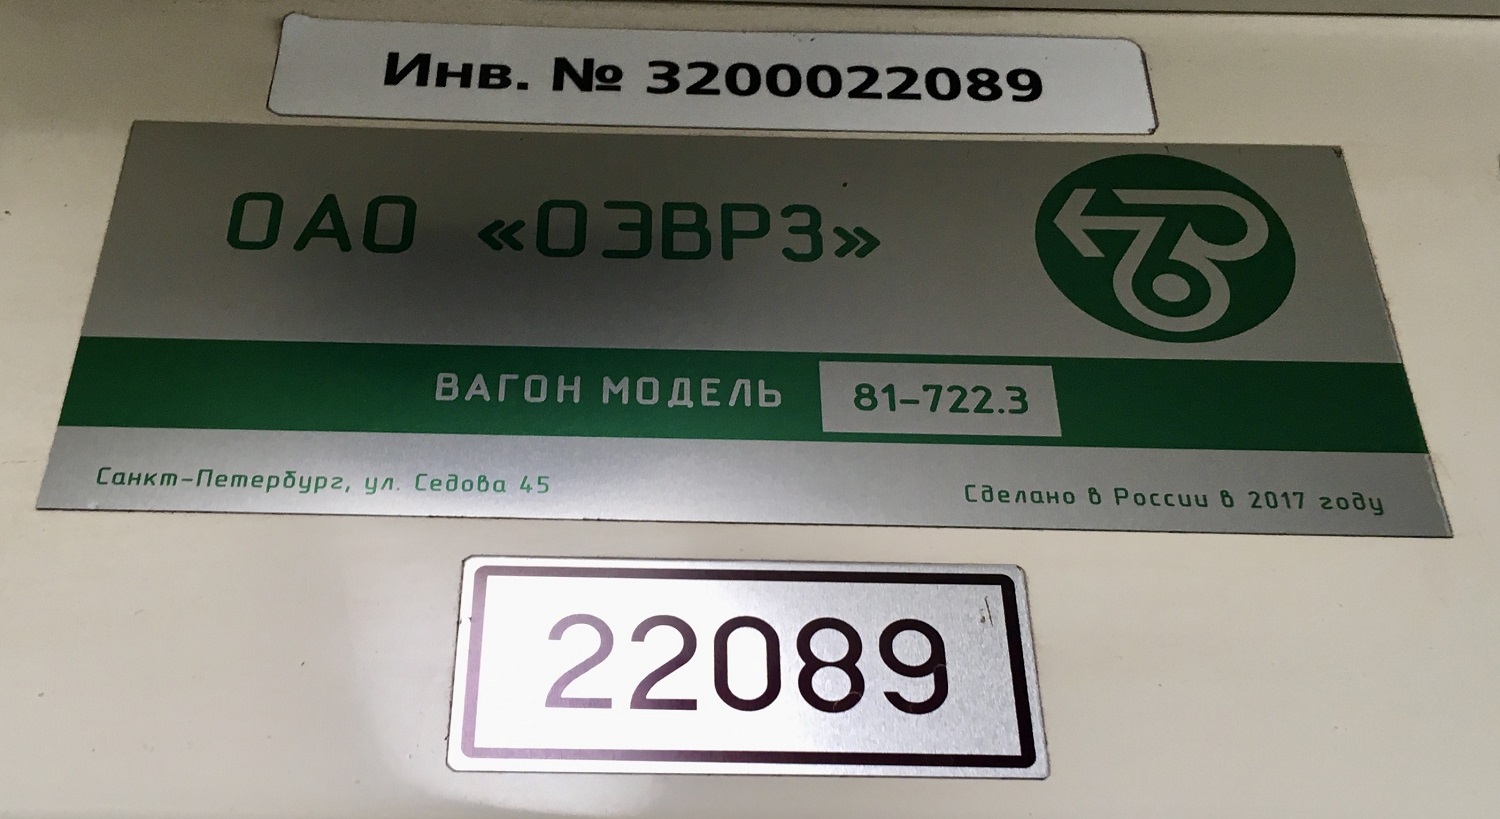 Sankt-Peterburg, 81-722.3 (OEVRZ) № 22089